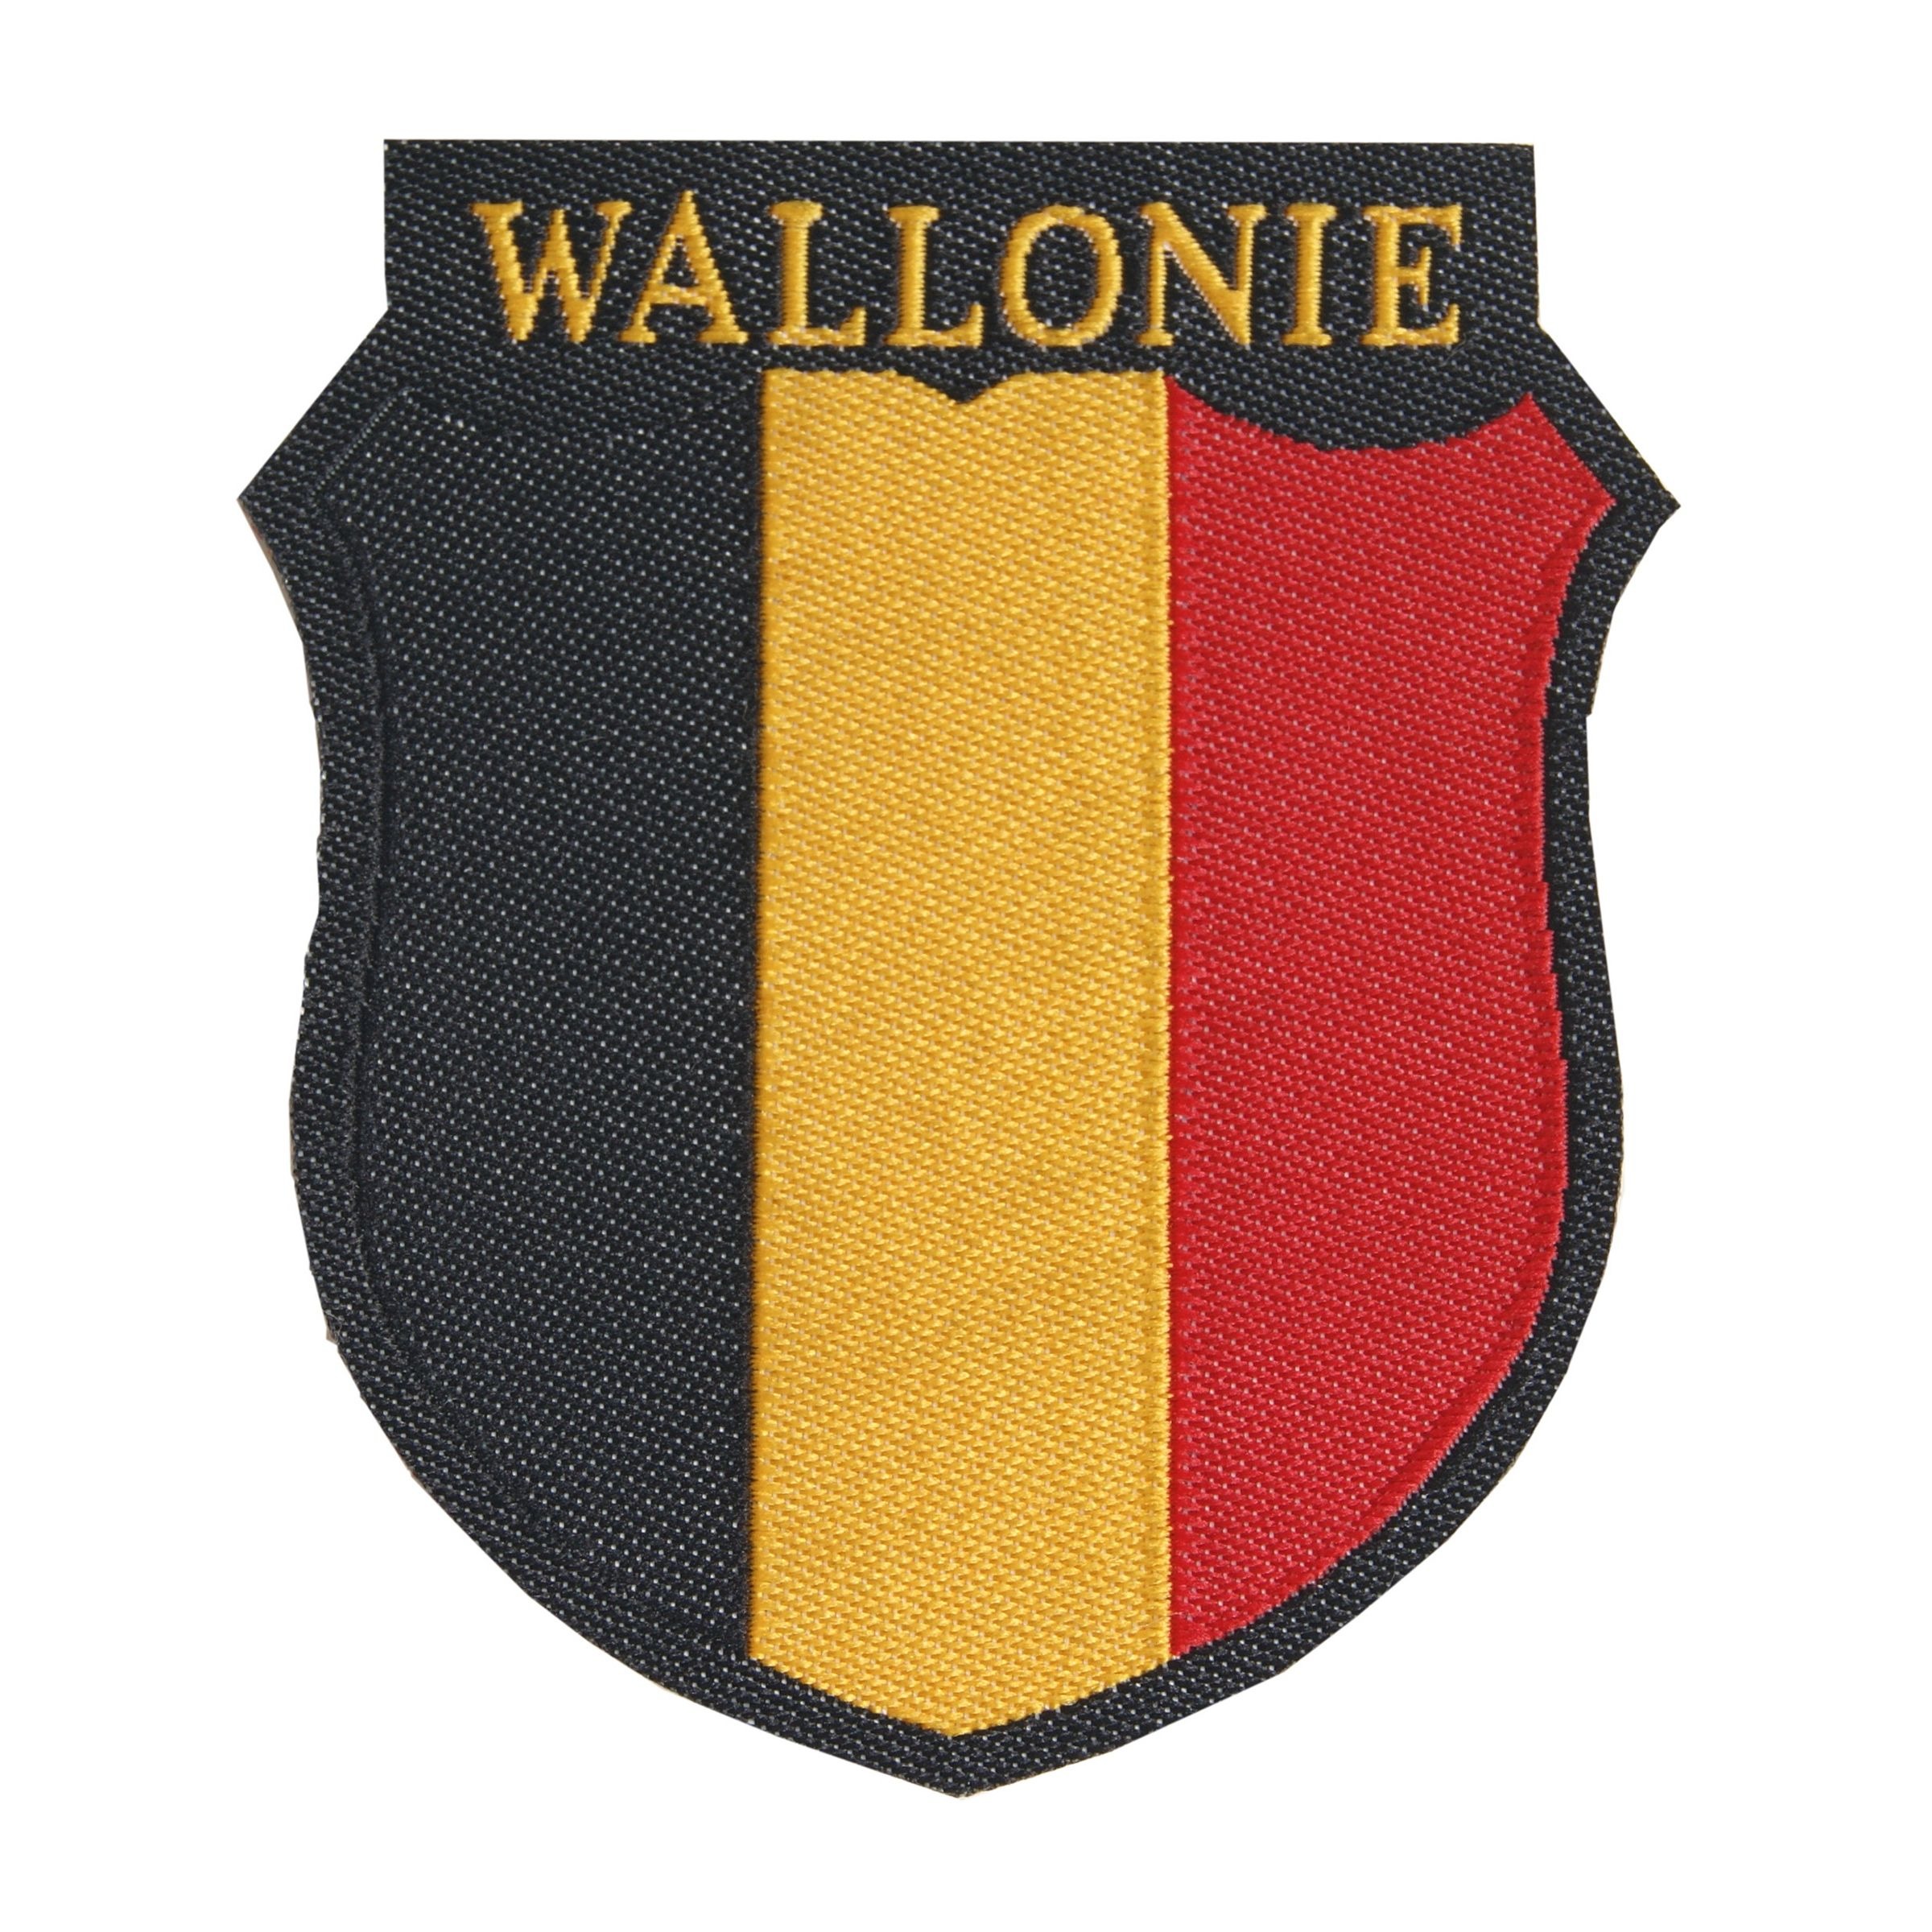 Wallonie patch - BeVo - repro